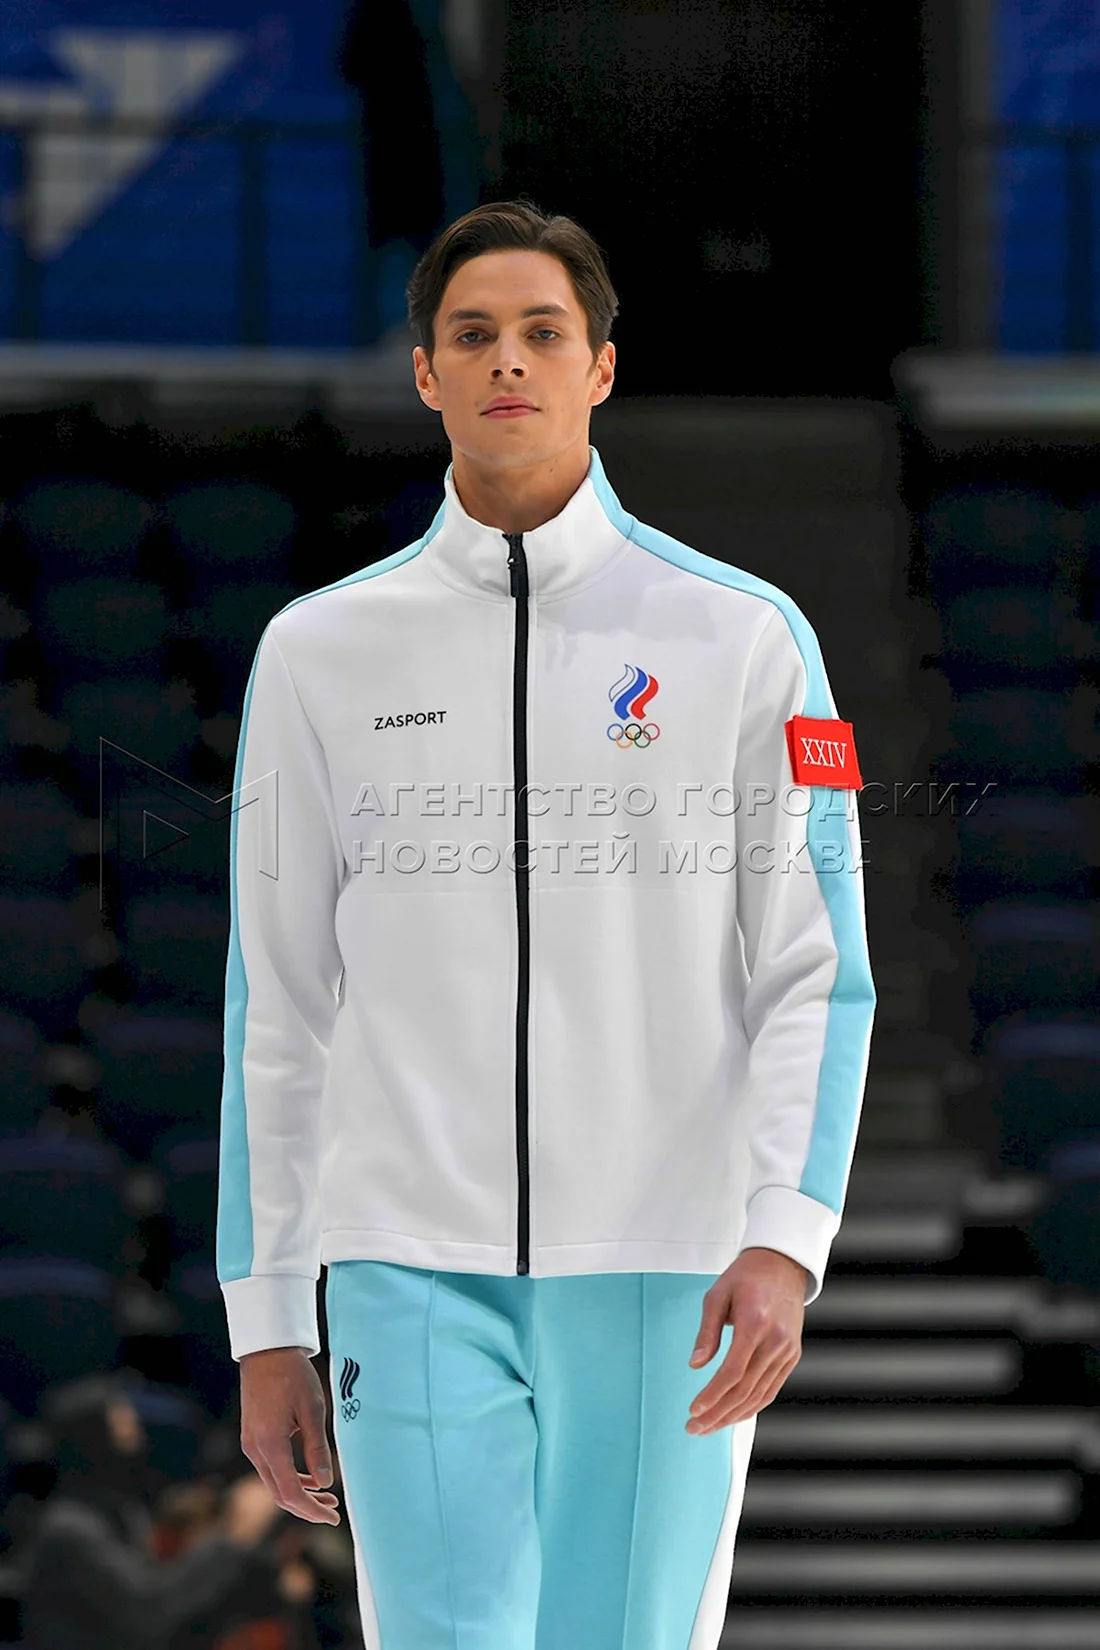 Zasport костюм олимпийской сборной 2022